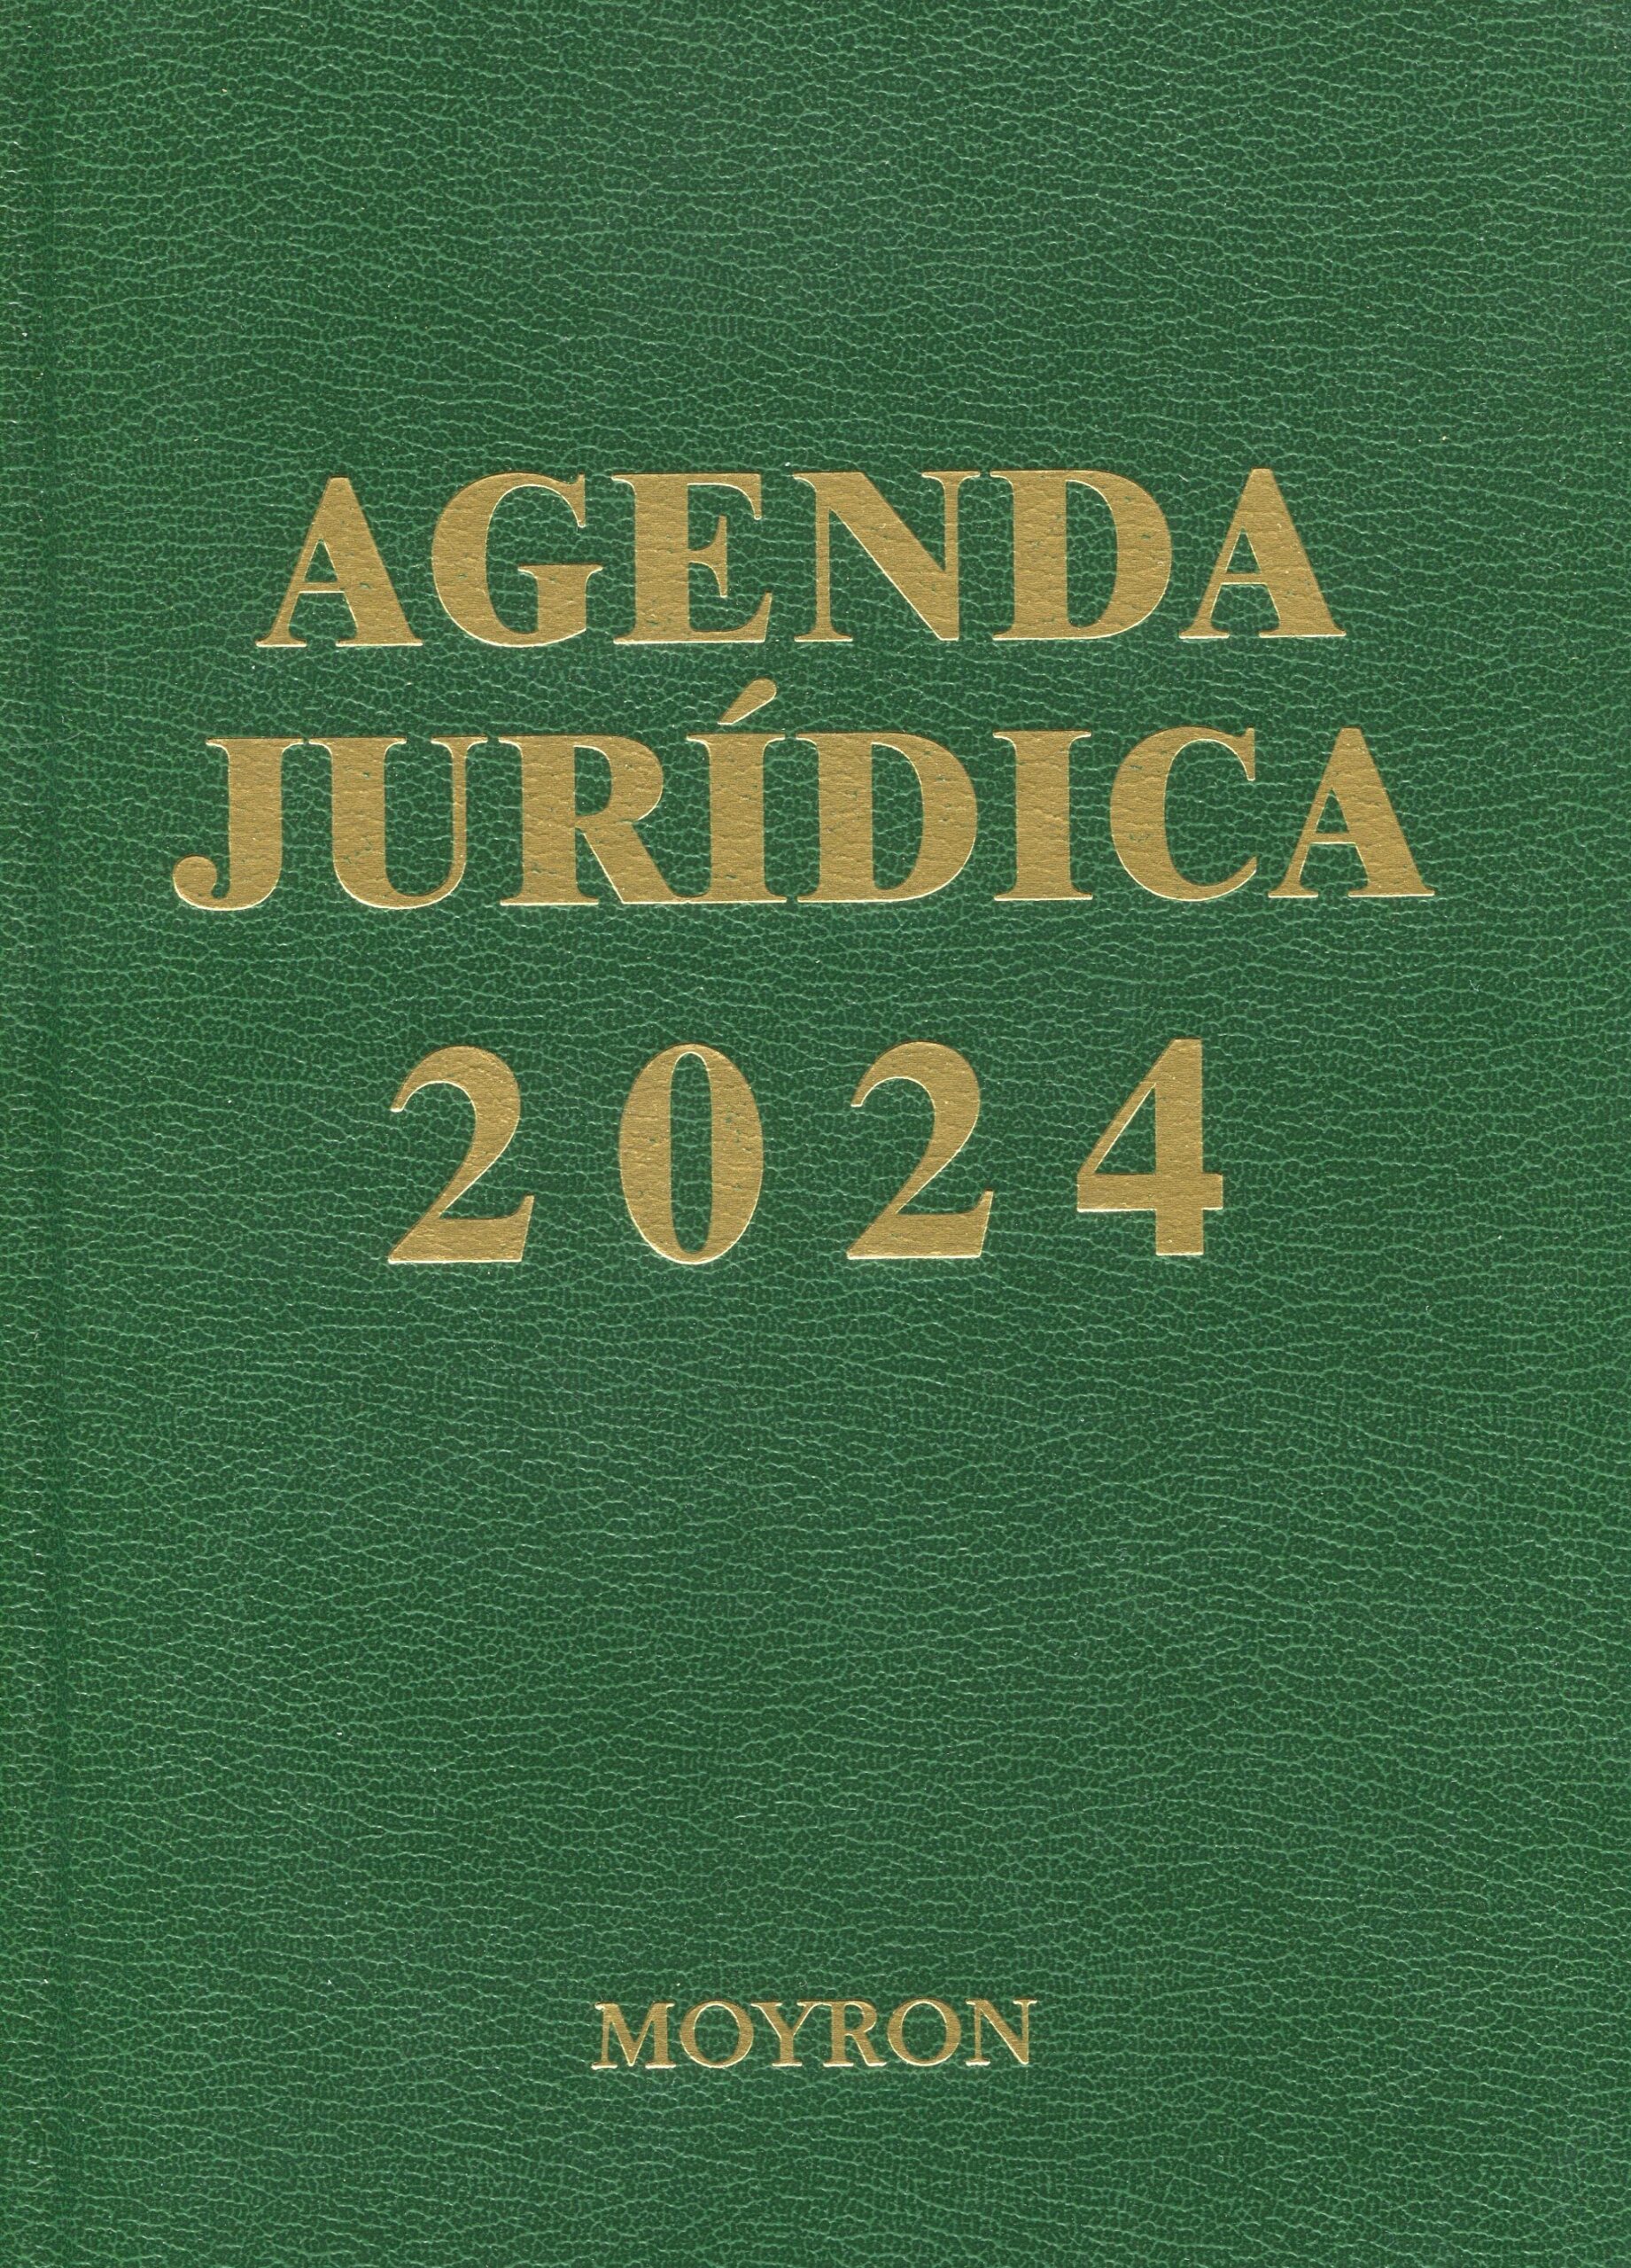 Agenda jurídica Moyron 2024 Verde 9788460502X24